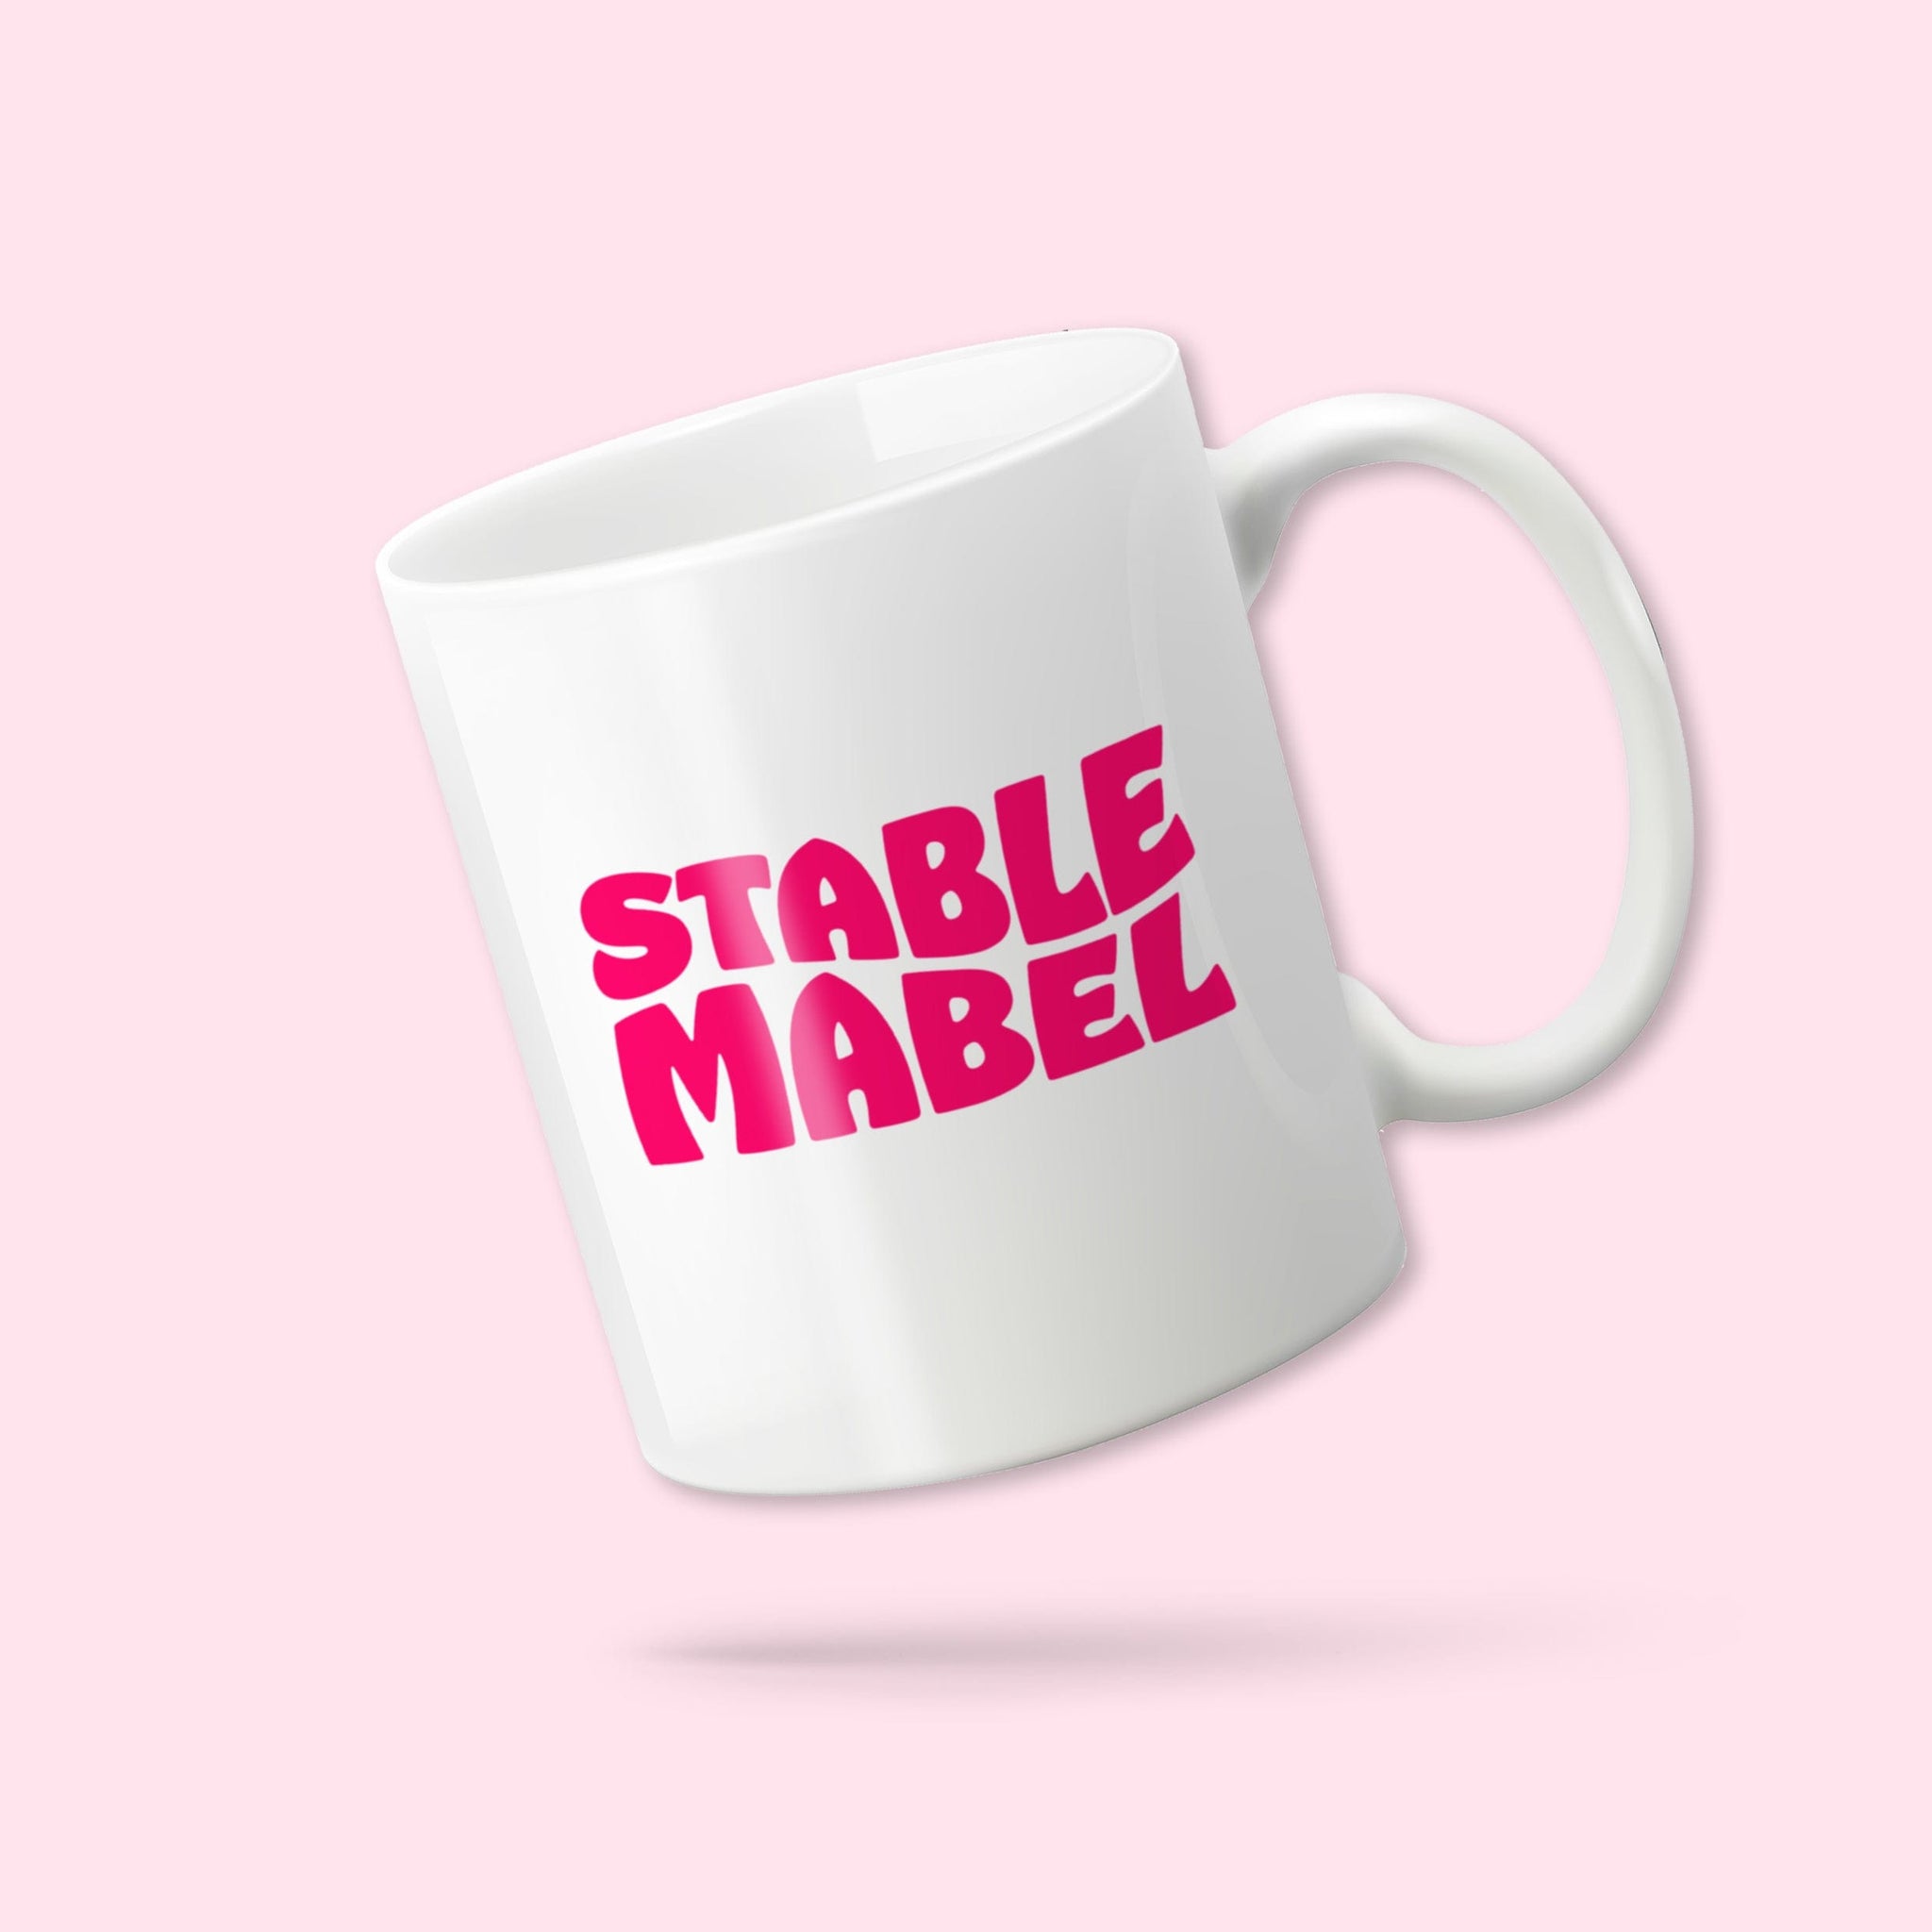 'Stable Mabel' mug